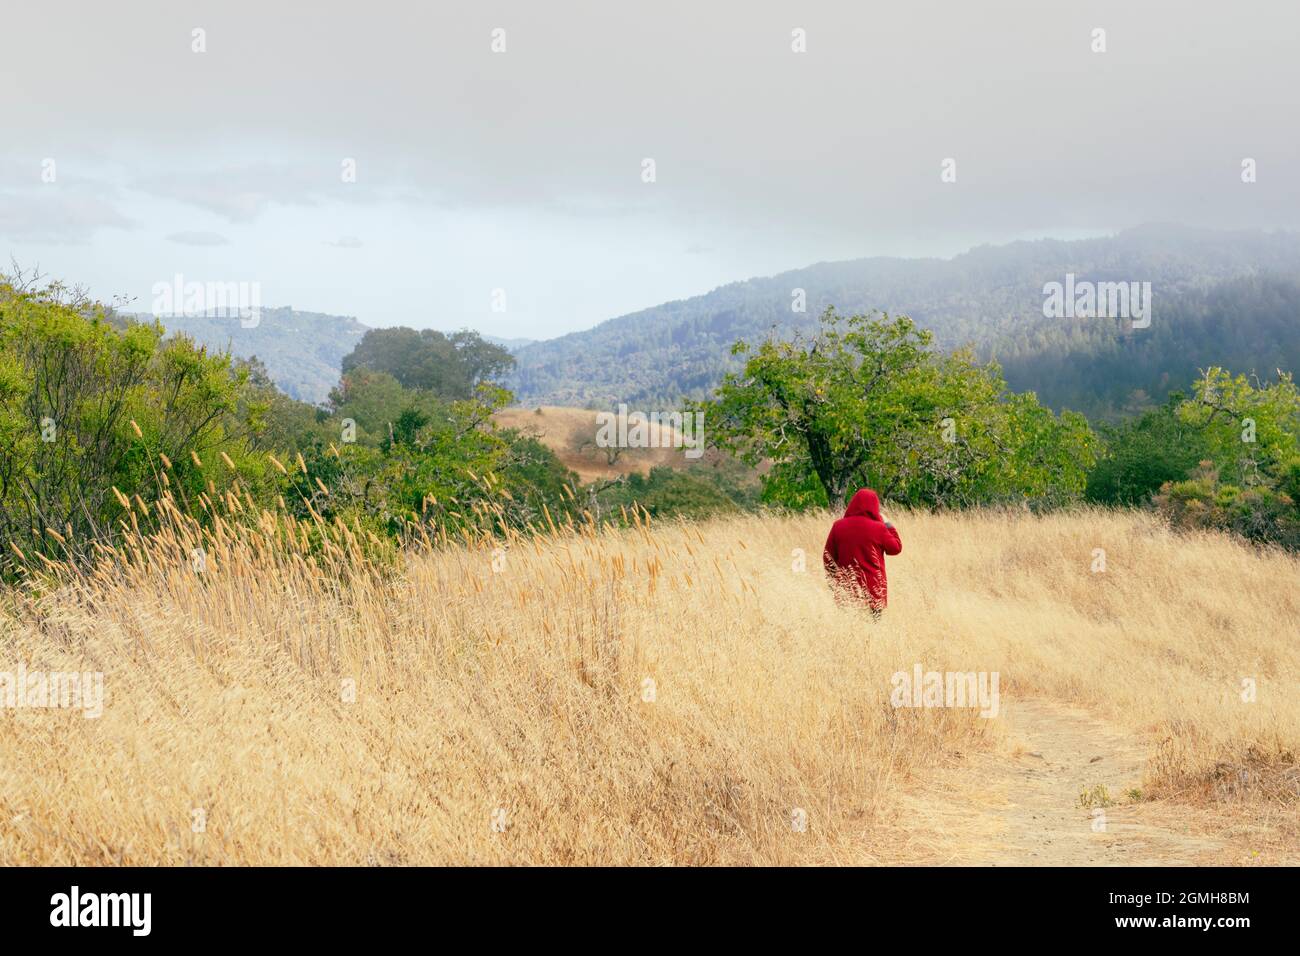 Woman Hiking in Red Jacket in California Coastal Range Stock Photo